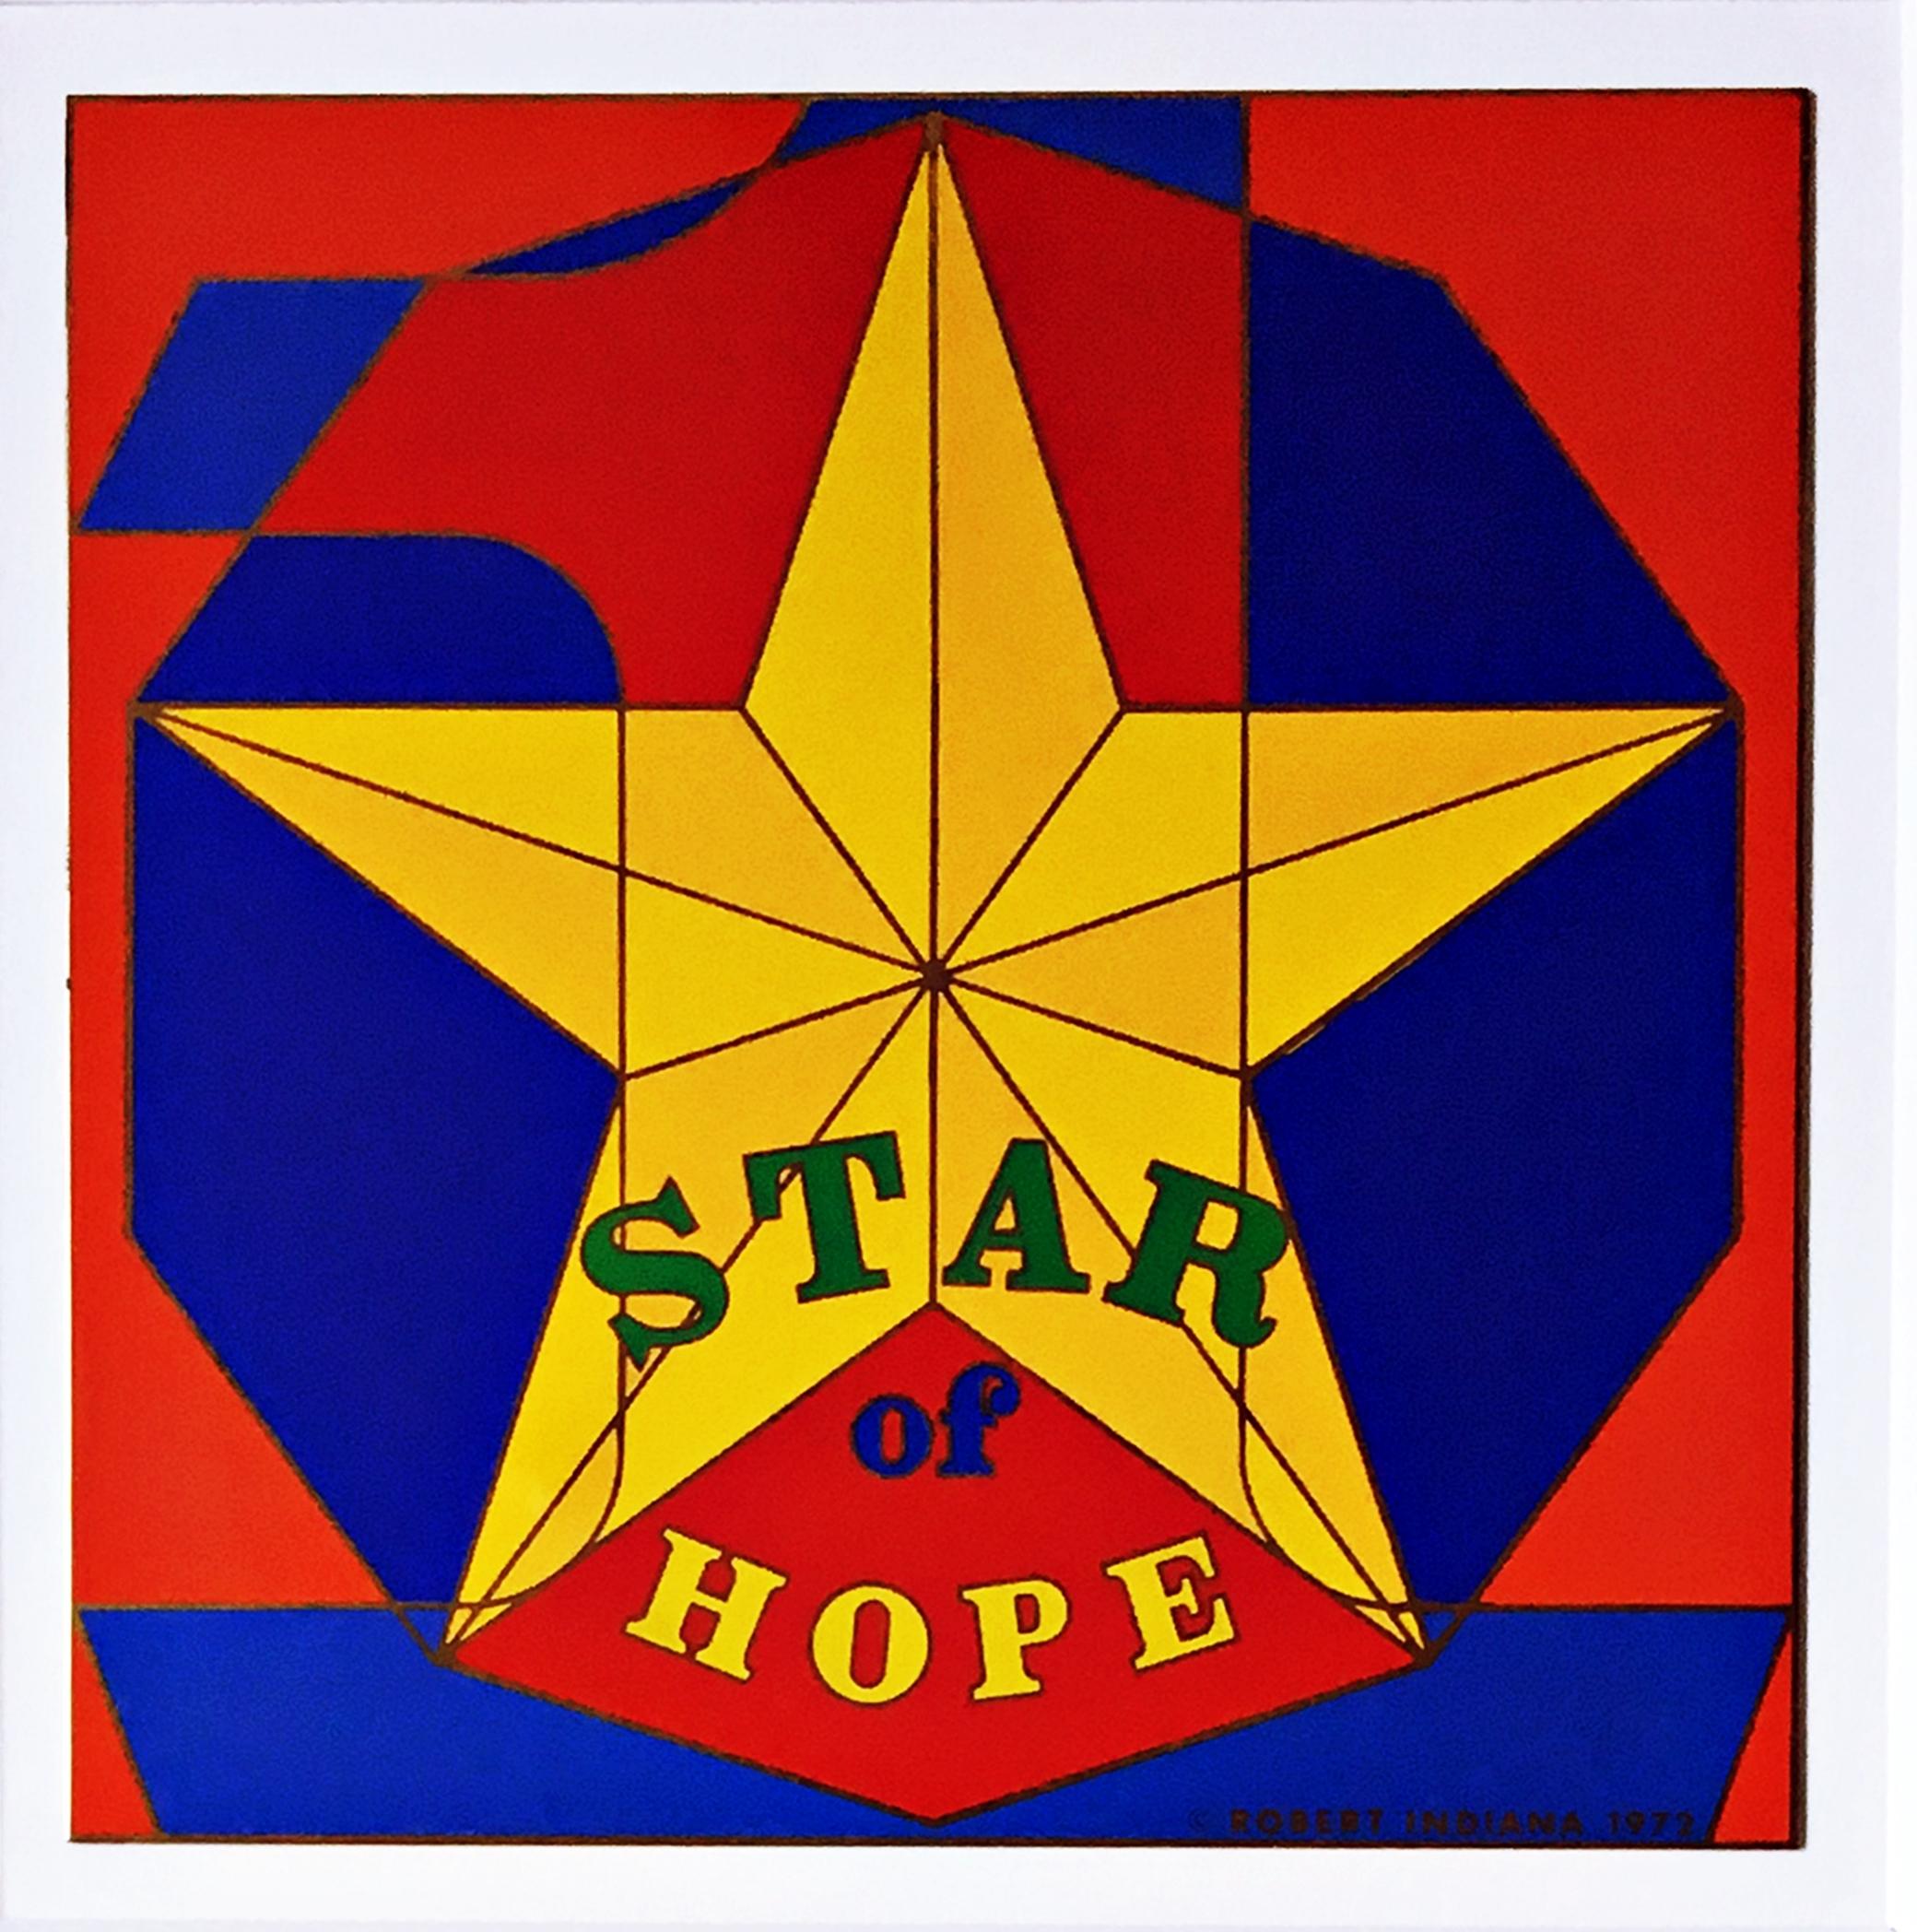 Star of Hope, émail sur plaque métallique avec nom et copyright estampillés, encadré - Mixed Media Art de Robert Indiana